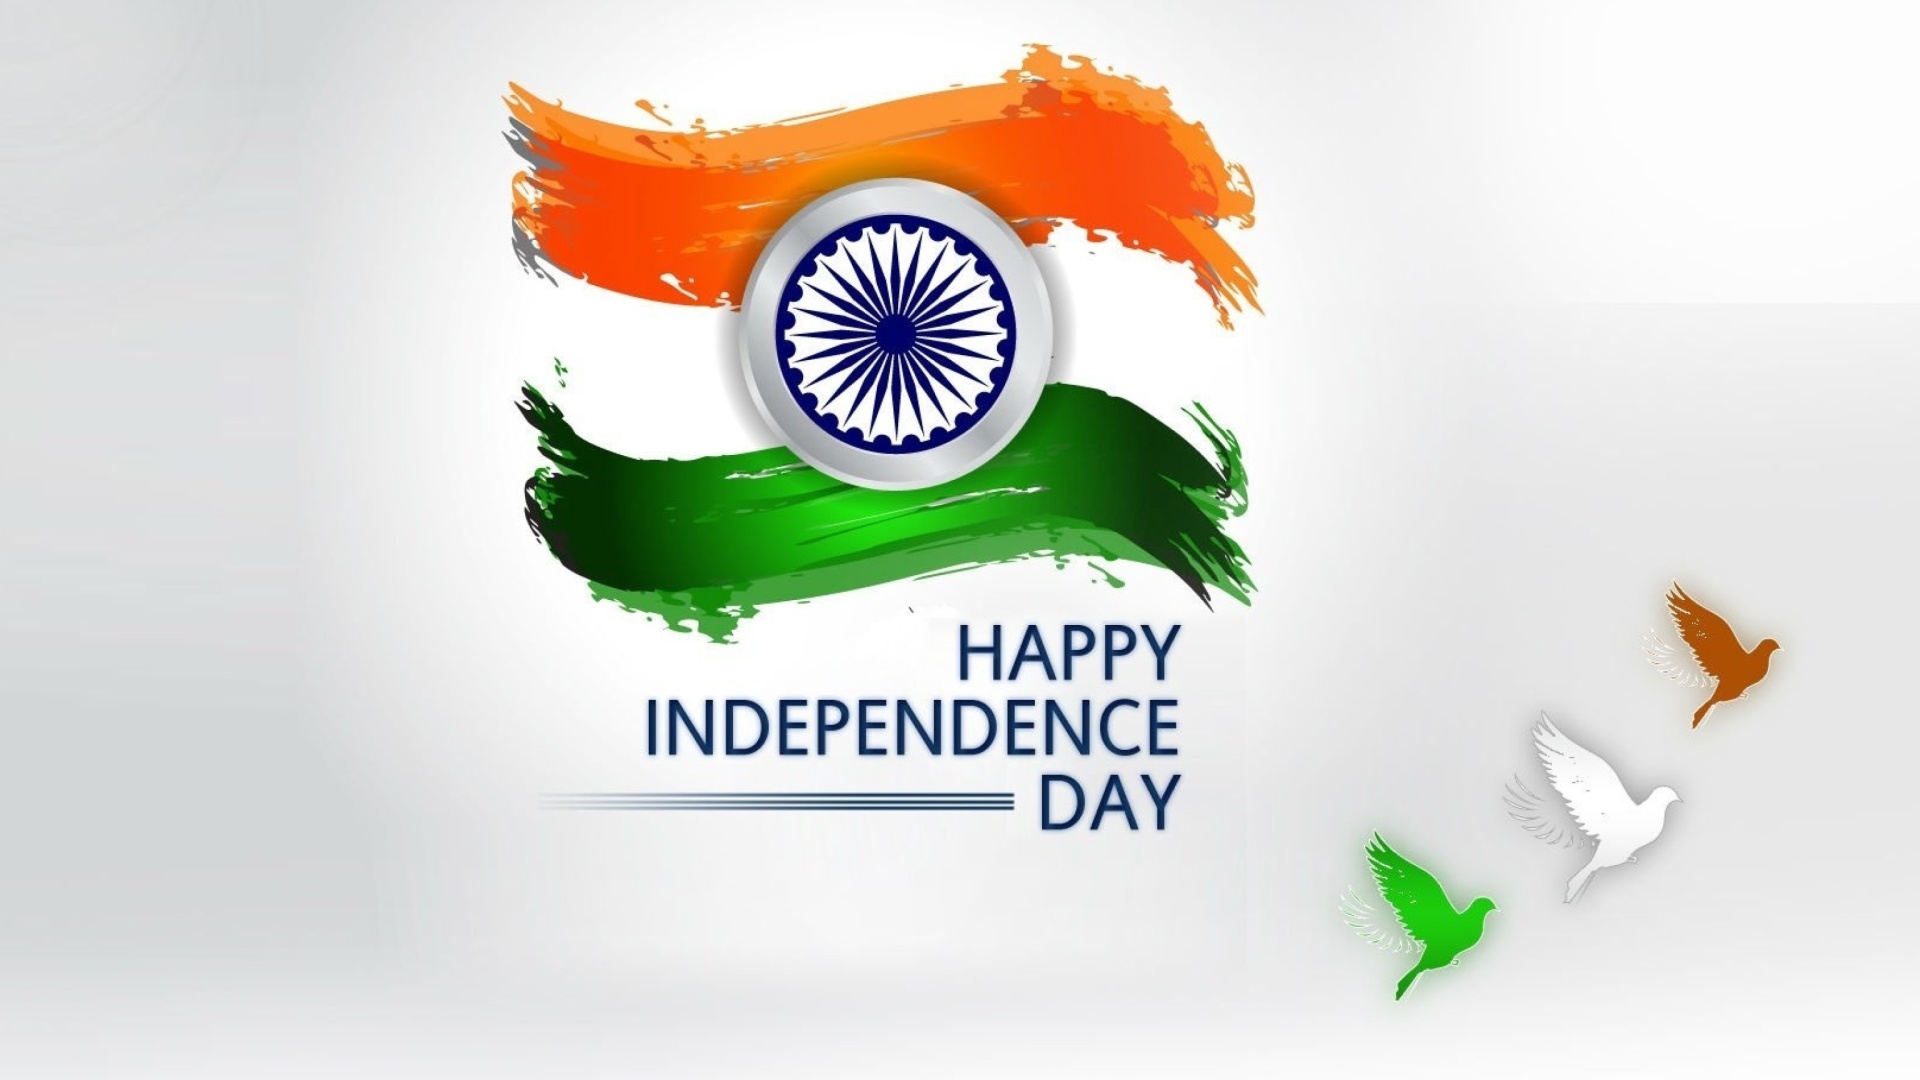 Обои Independence Day India 1920x1080